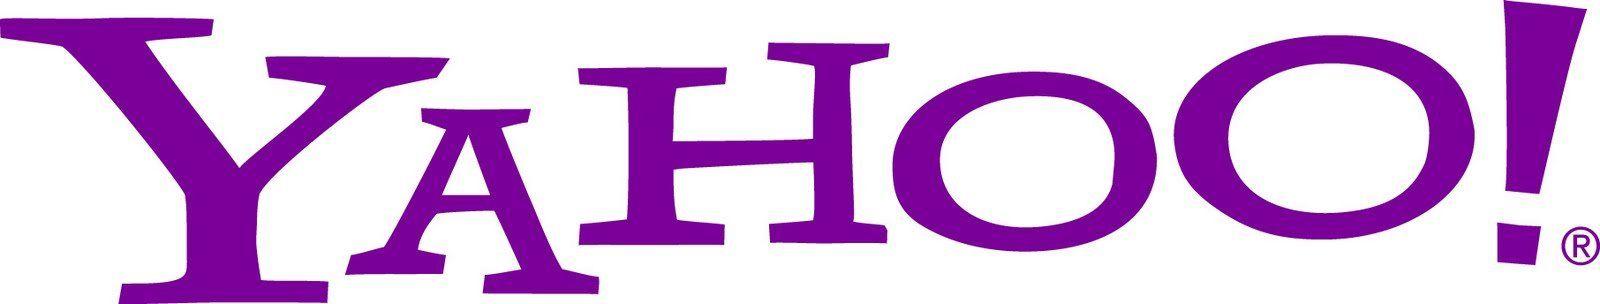 Yahoo.com Logo - Yahoo Logos